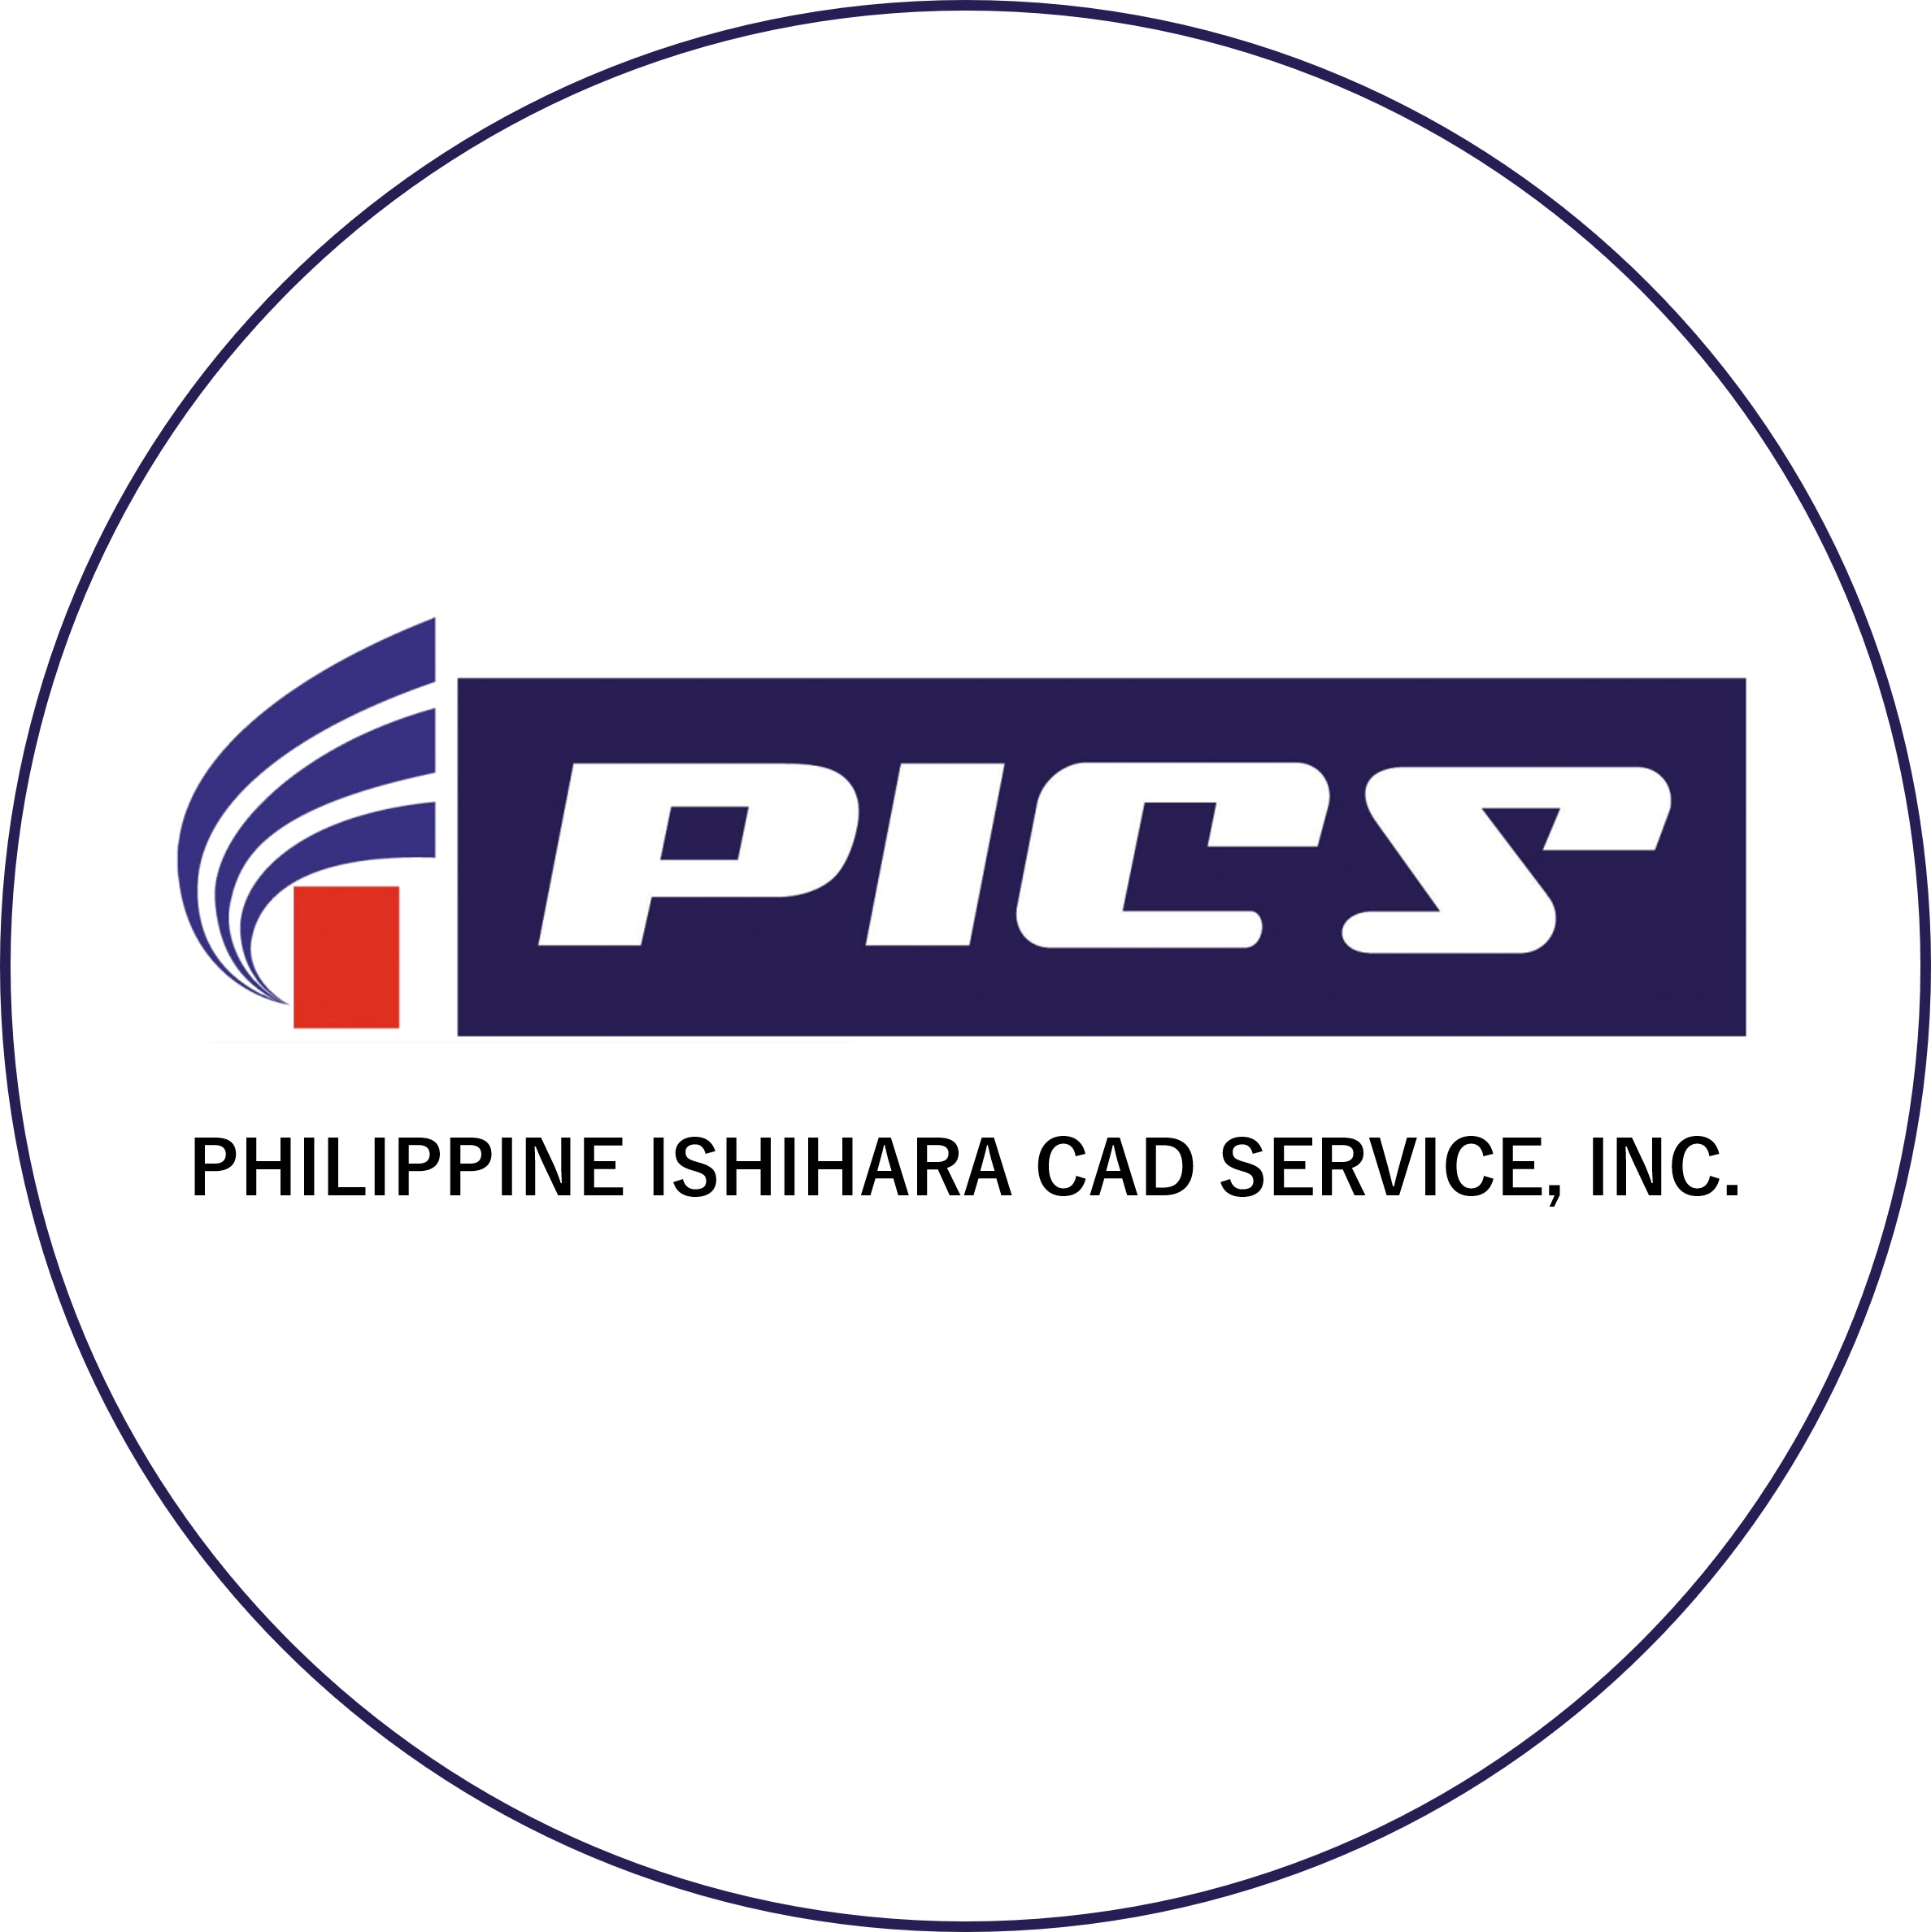 Philippine Ishihara Cad Service, Inc.